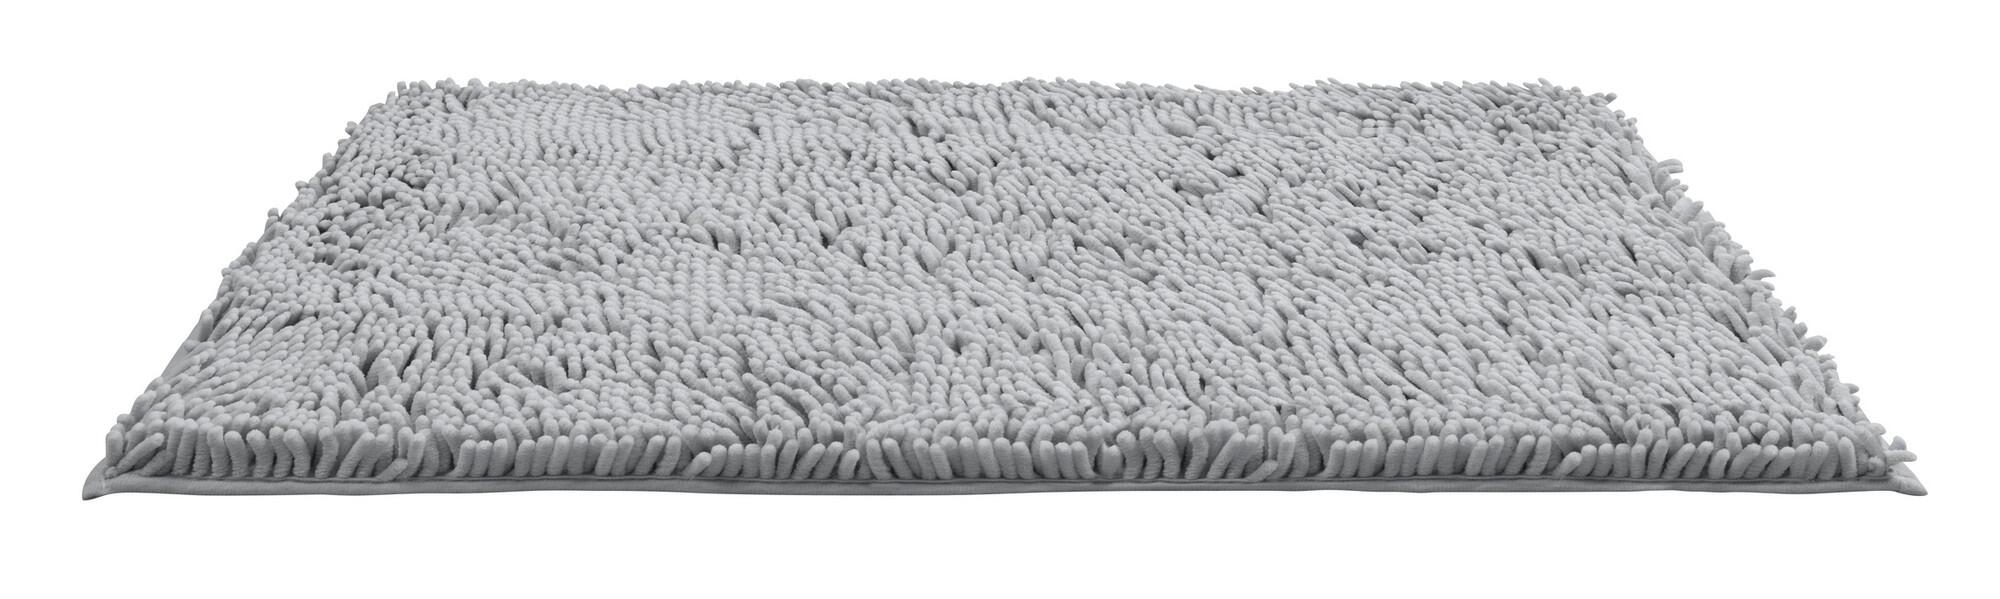 Alfombra de baño rectangular chenille 50x80 cm gris